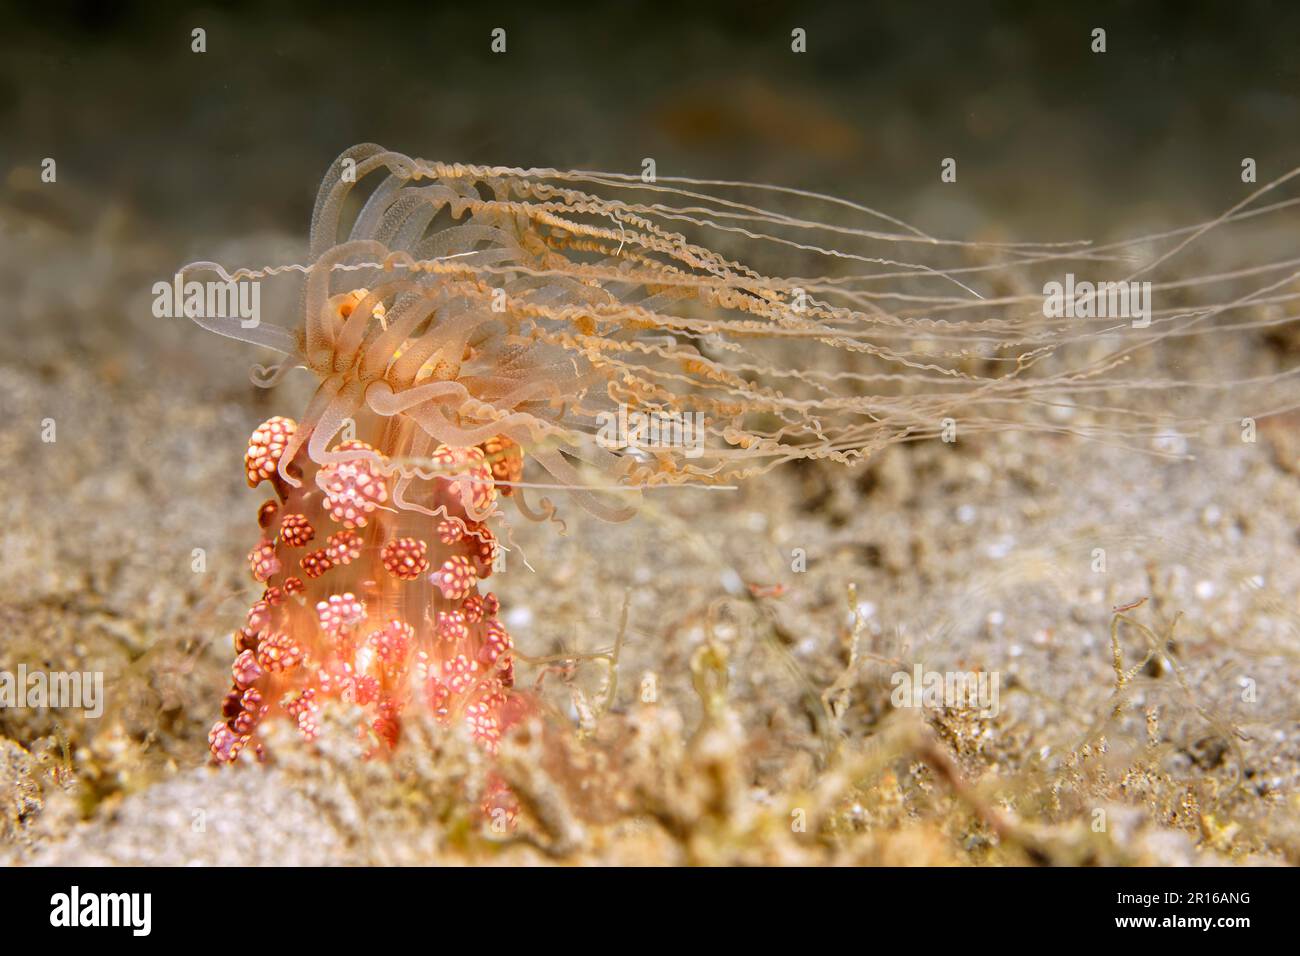 Tuberculous night anemone (Alicia sansibarensis), poisonous, nettle, sandy bottom, Sulu Sea, Pacific Ocean, Apo Island Protected Landscape-Seascape Stock Photo